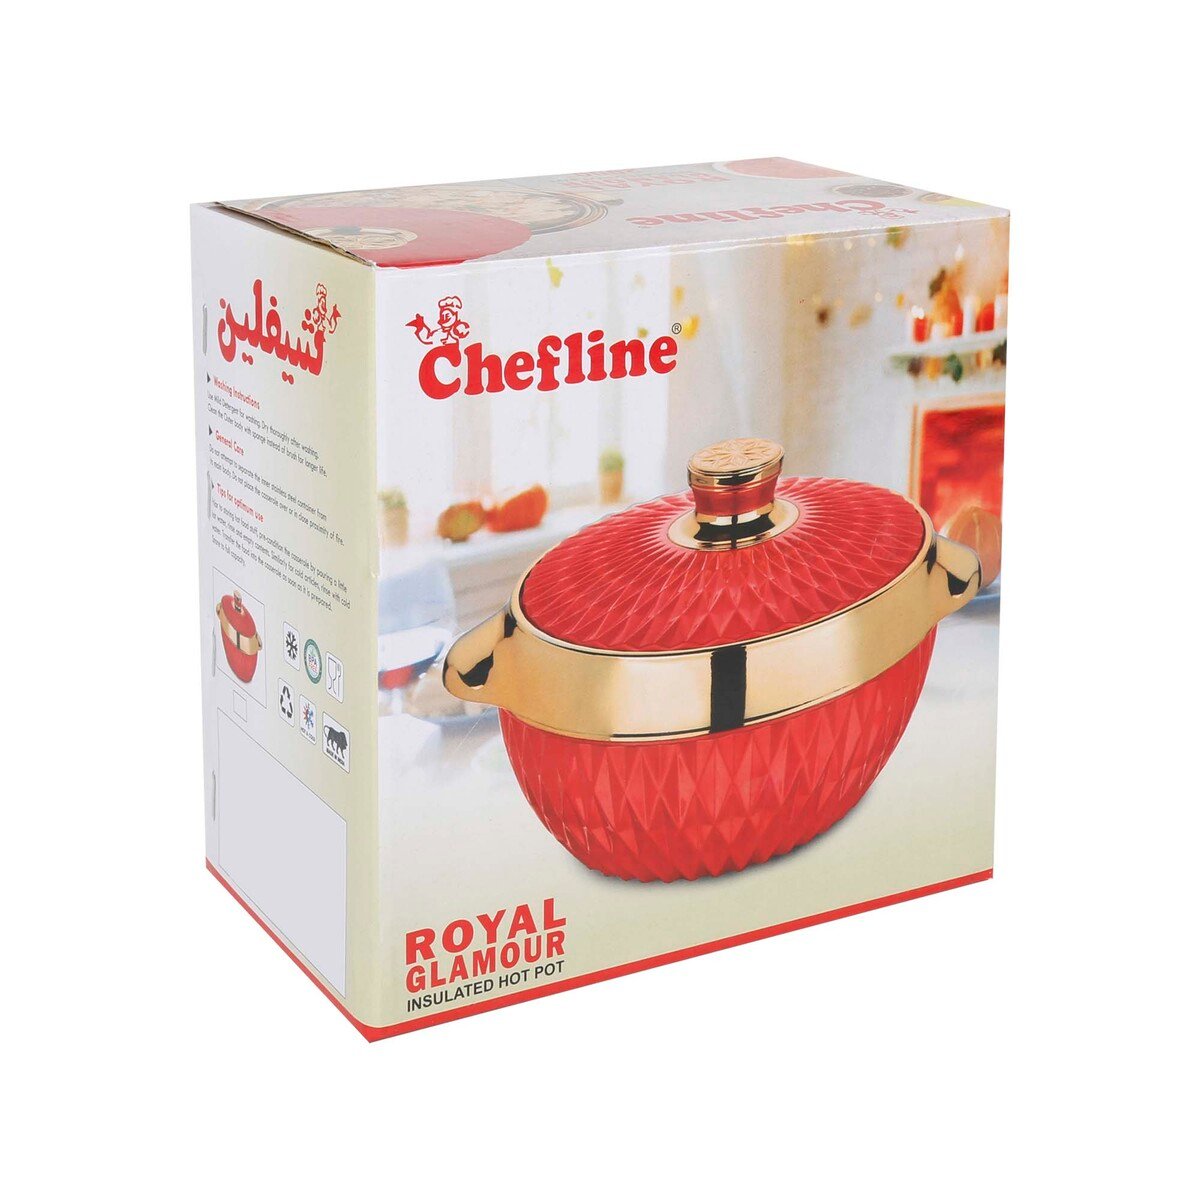 Chefline Plastic Insulated Hot Pot Royal Glamour, 3000 ml